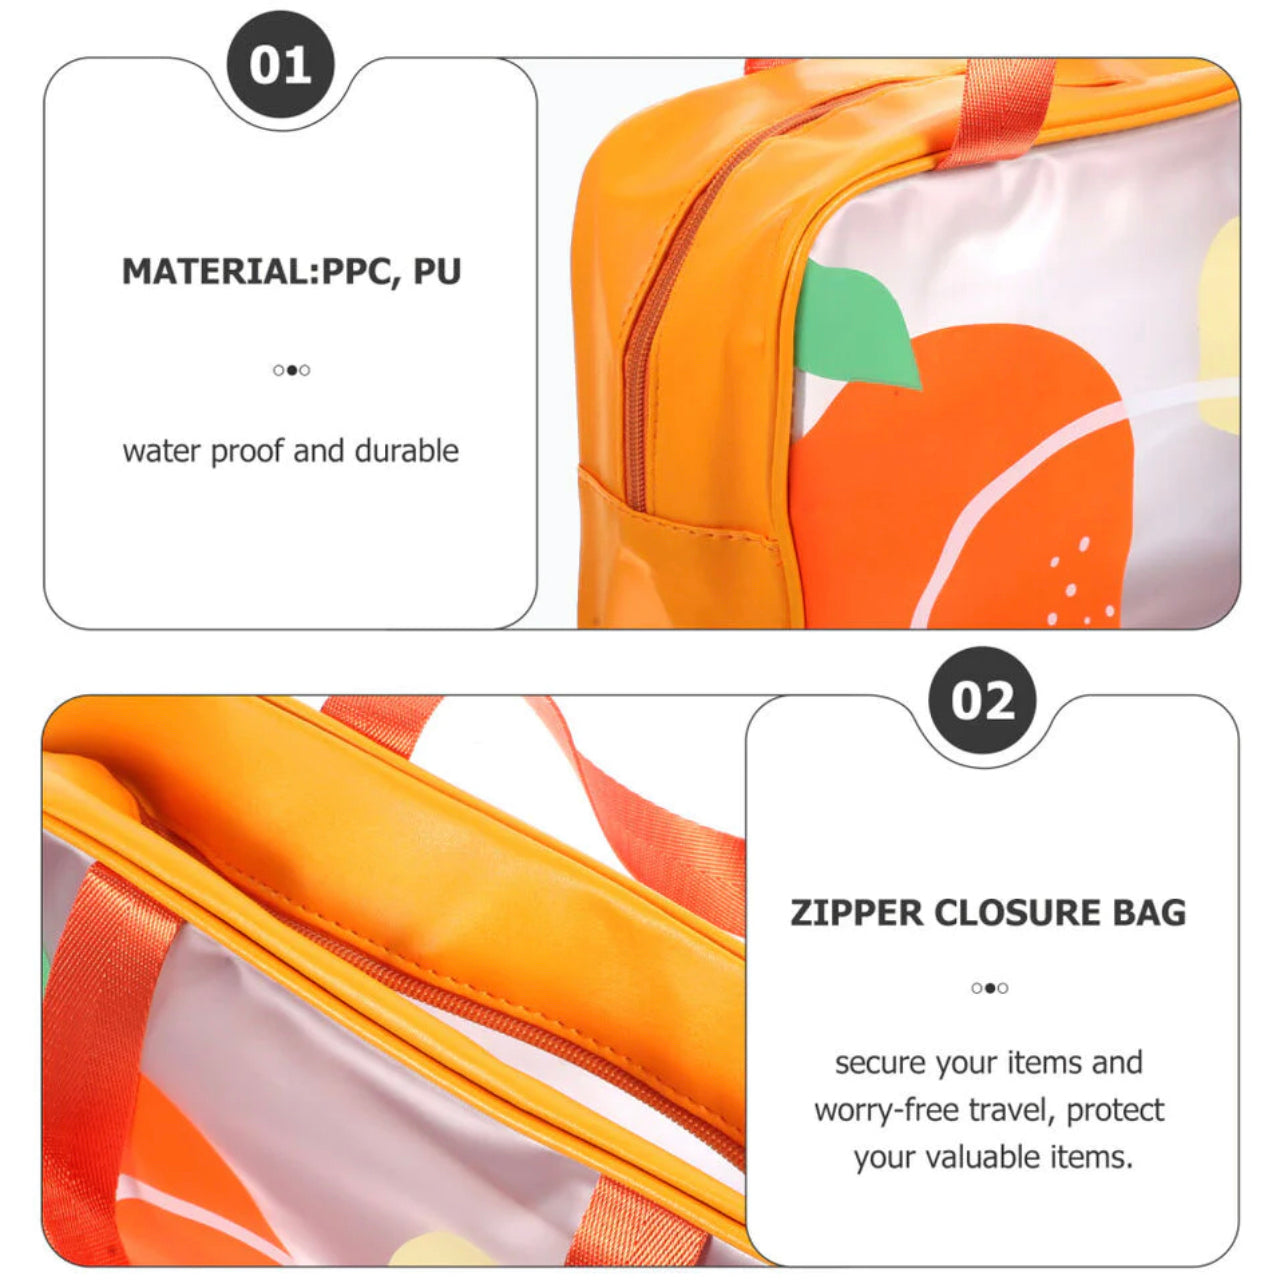 Versatile and Stylish: Medium Waterproof Fruit Theme Multipurpose Storage Bag